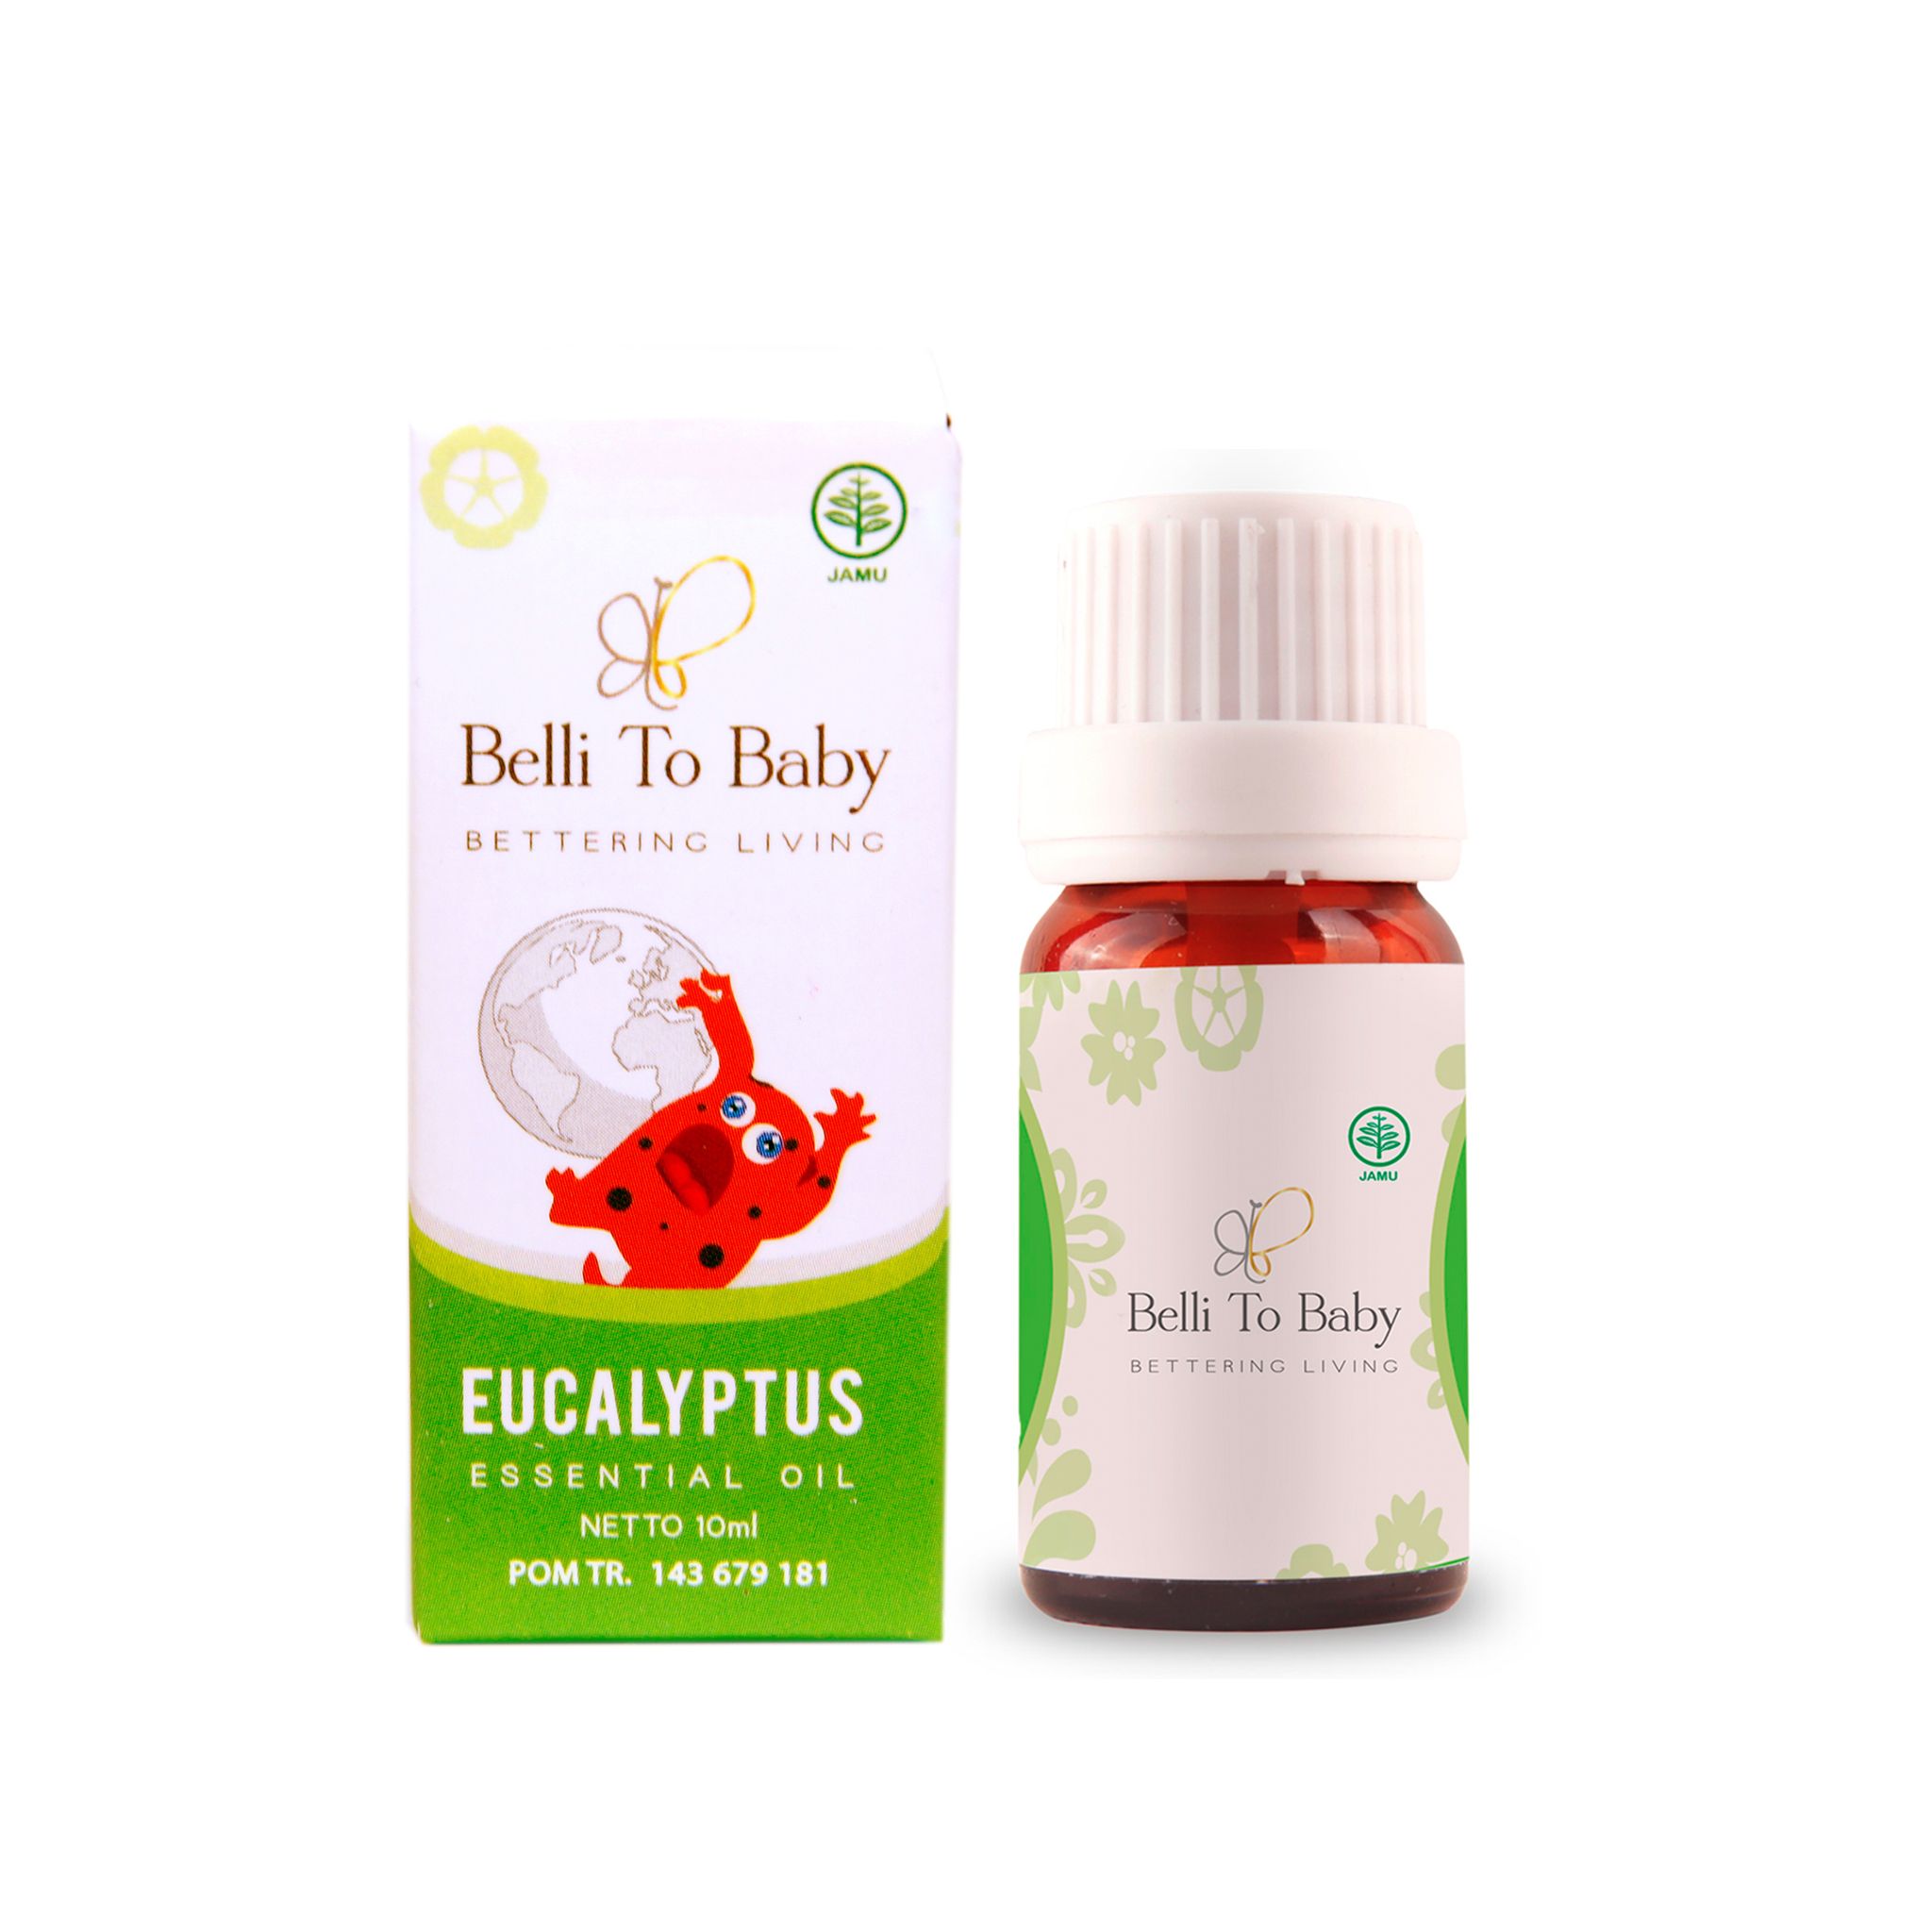 Belli To Baby Essential Oil Eucalyptus 10ml - 2